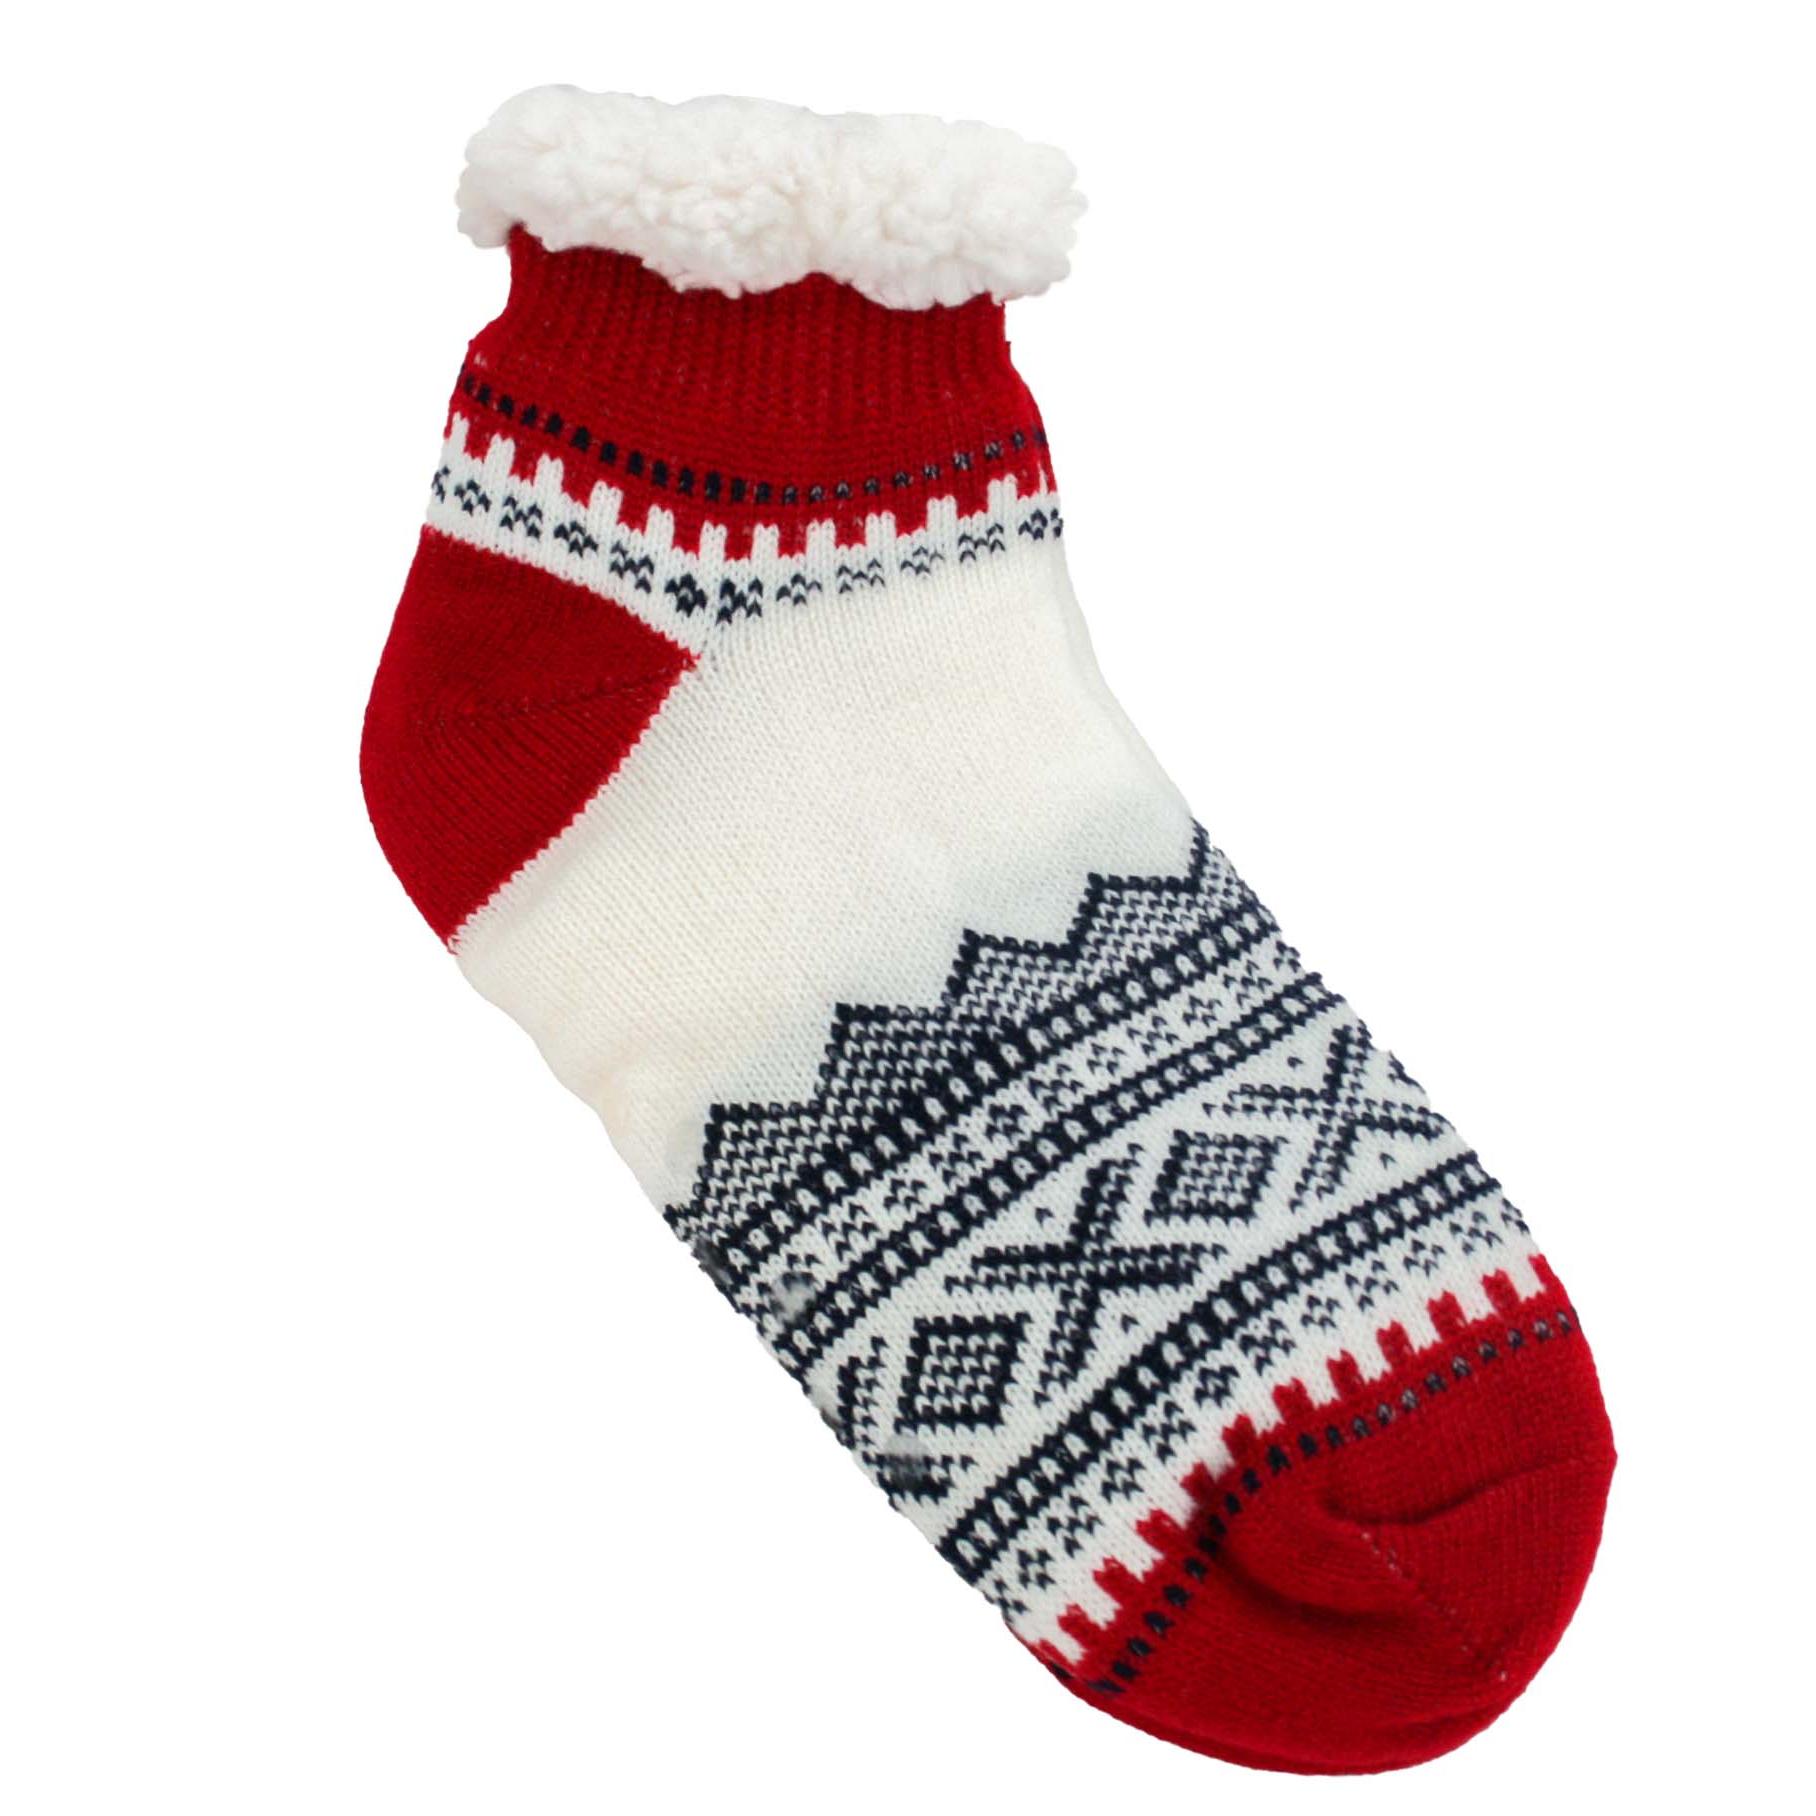 Snuggle ankle sock Marius® pattern© white/blue/red - Brødrene Flaarønning